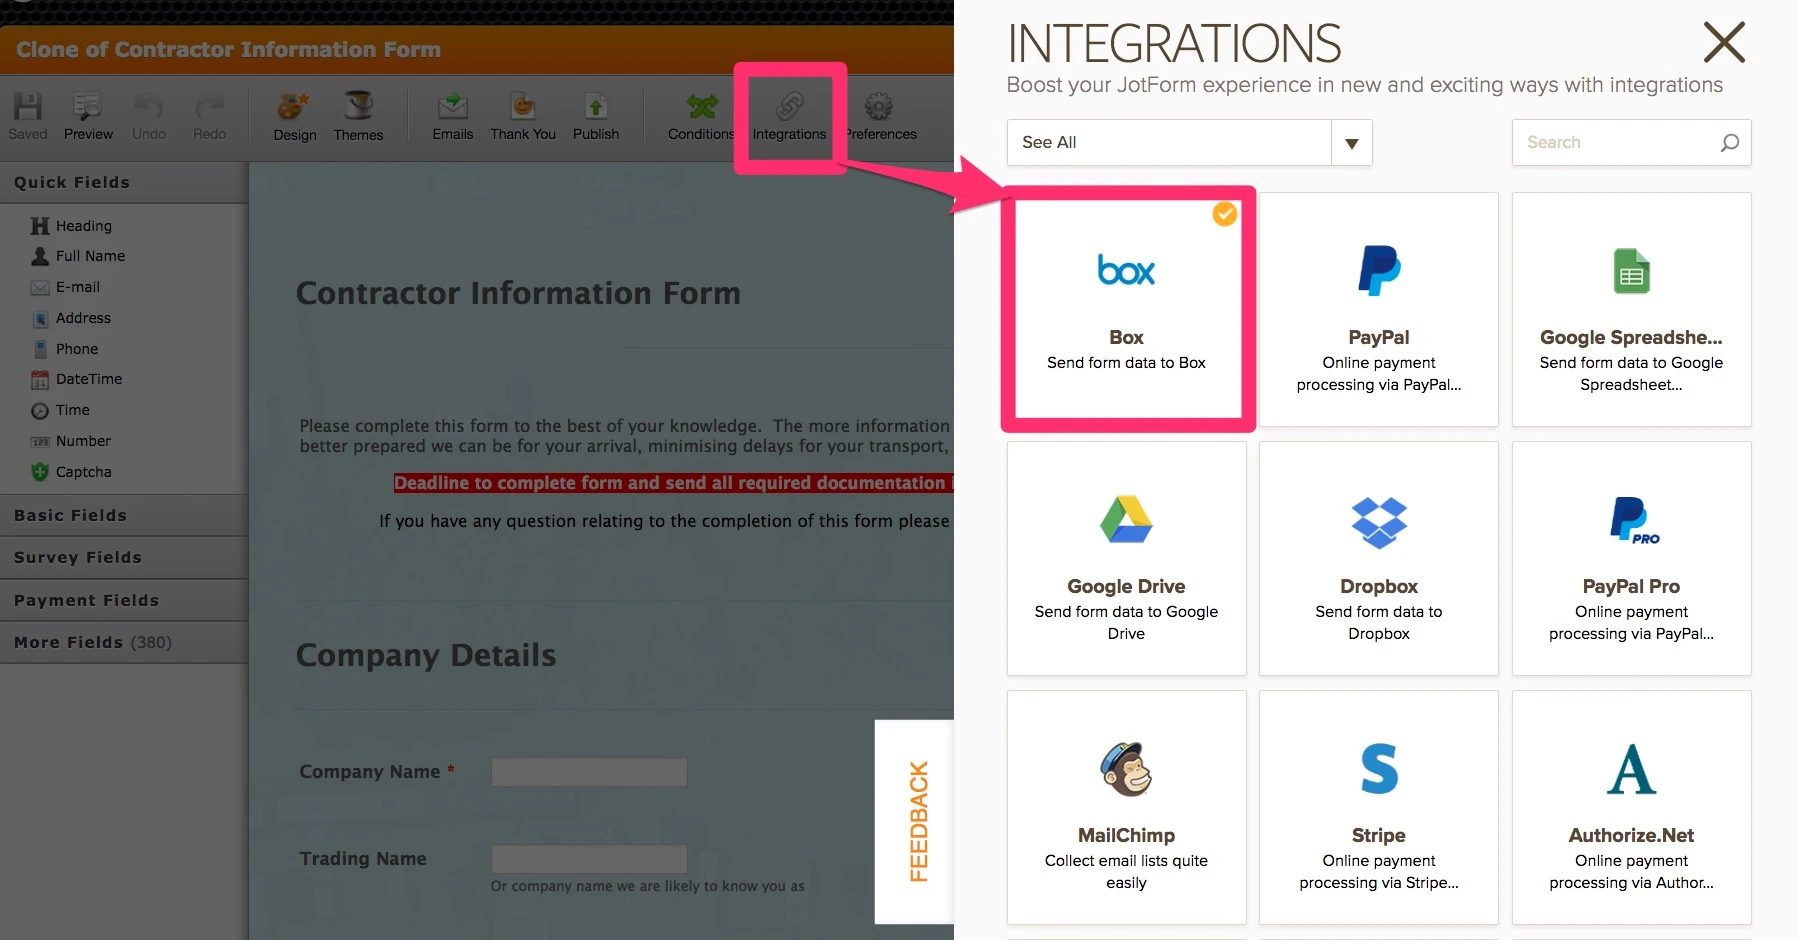 Box integration: Authentication error Image 1 Screenshot 30